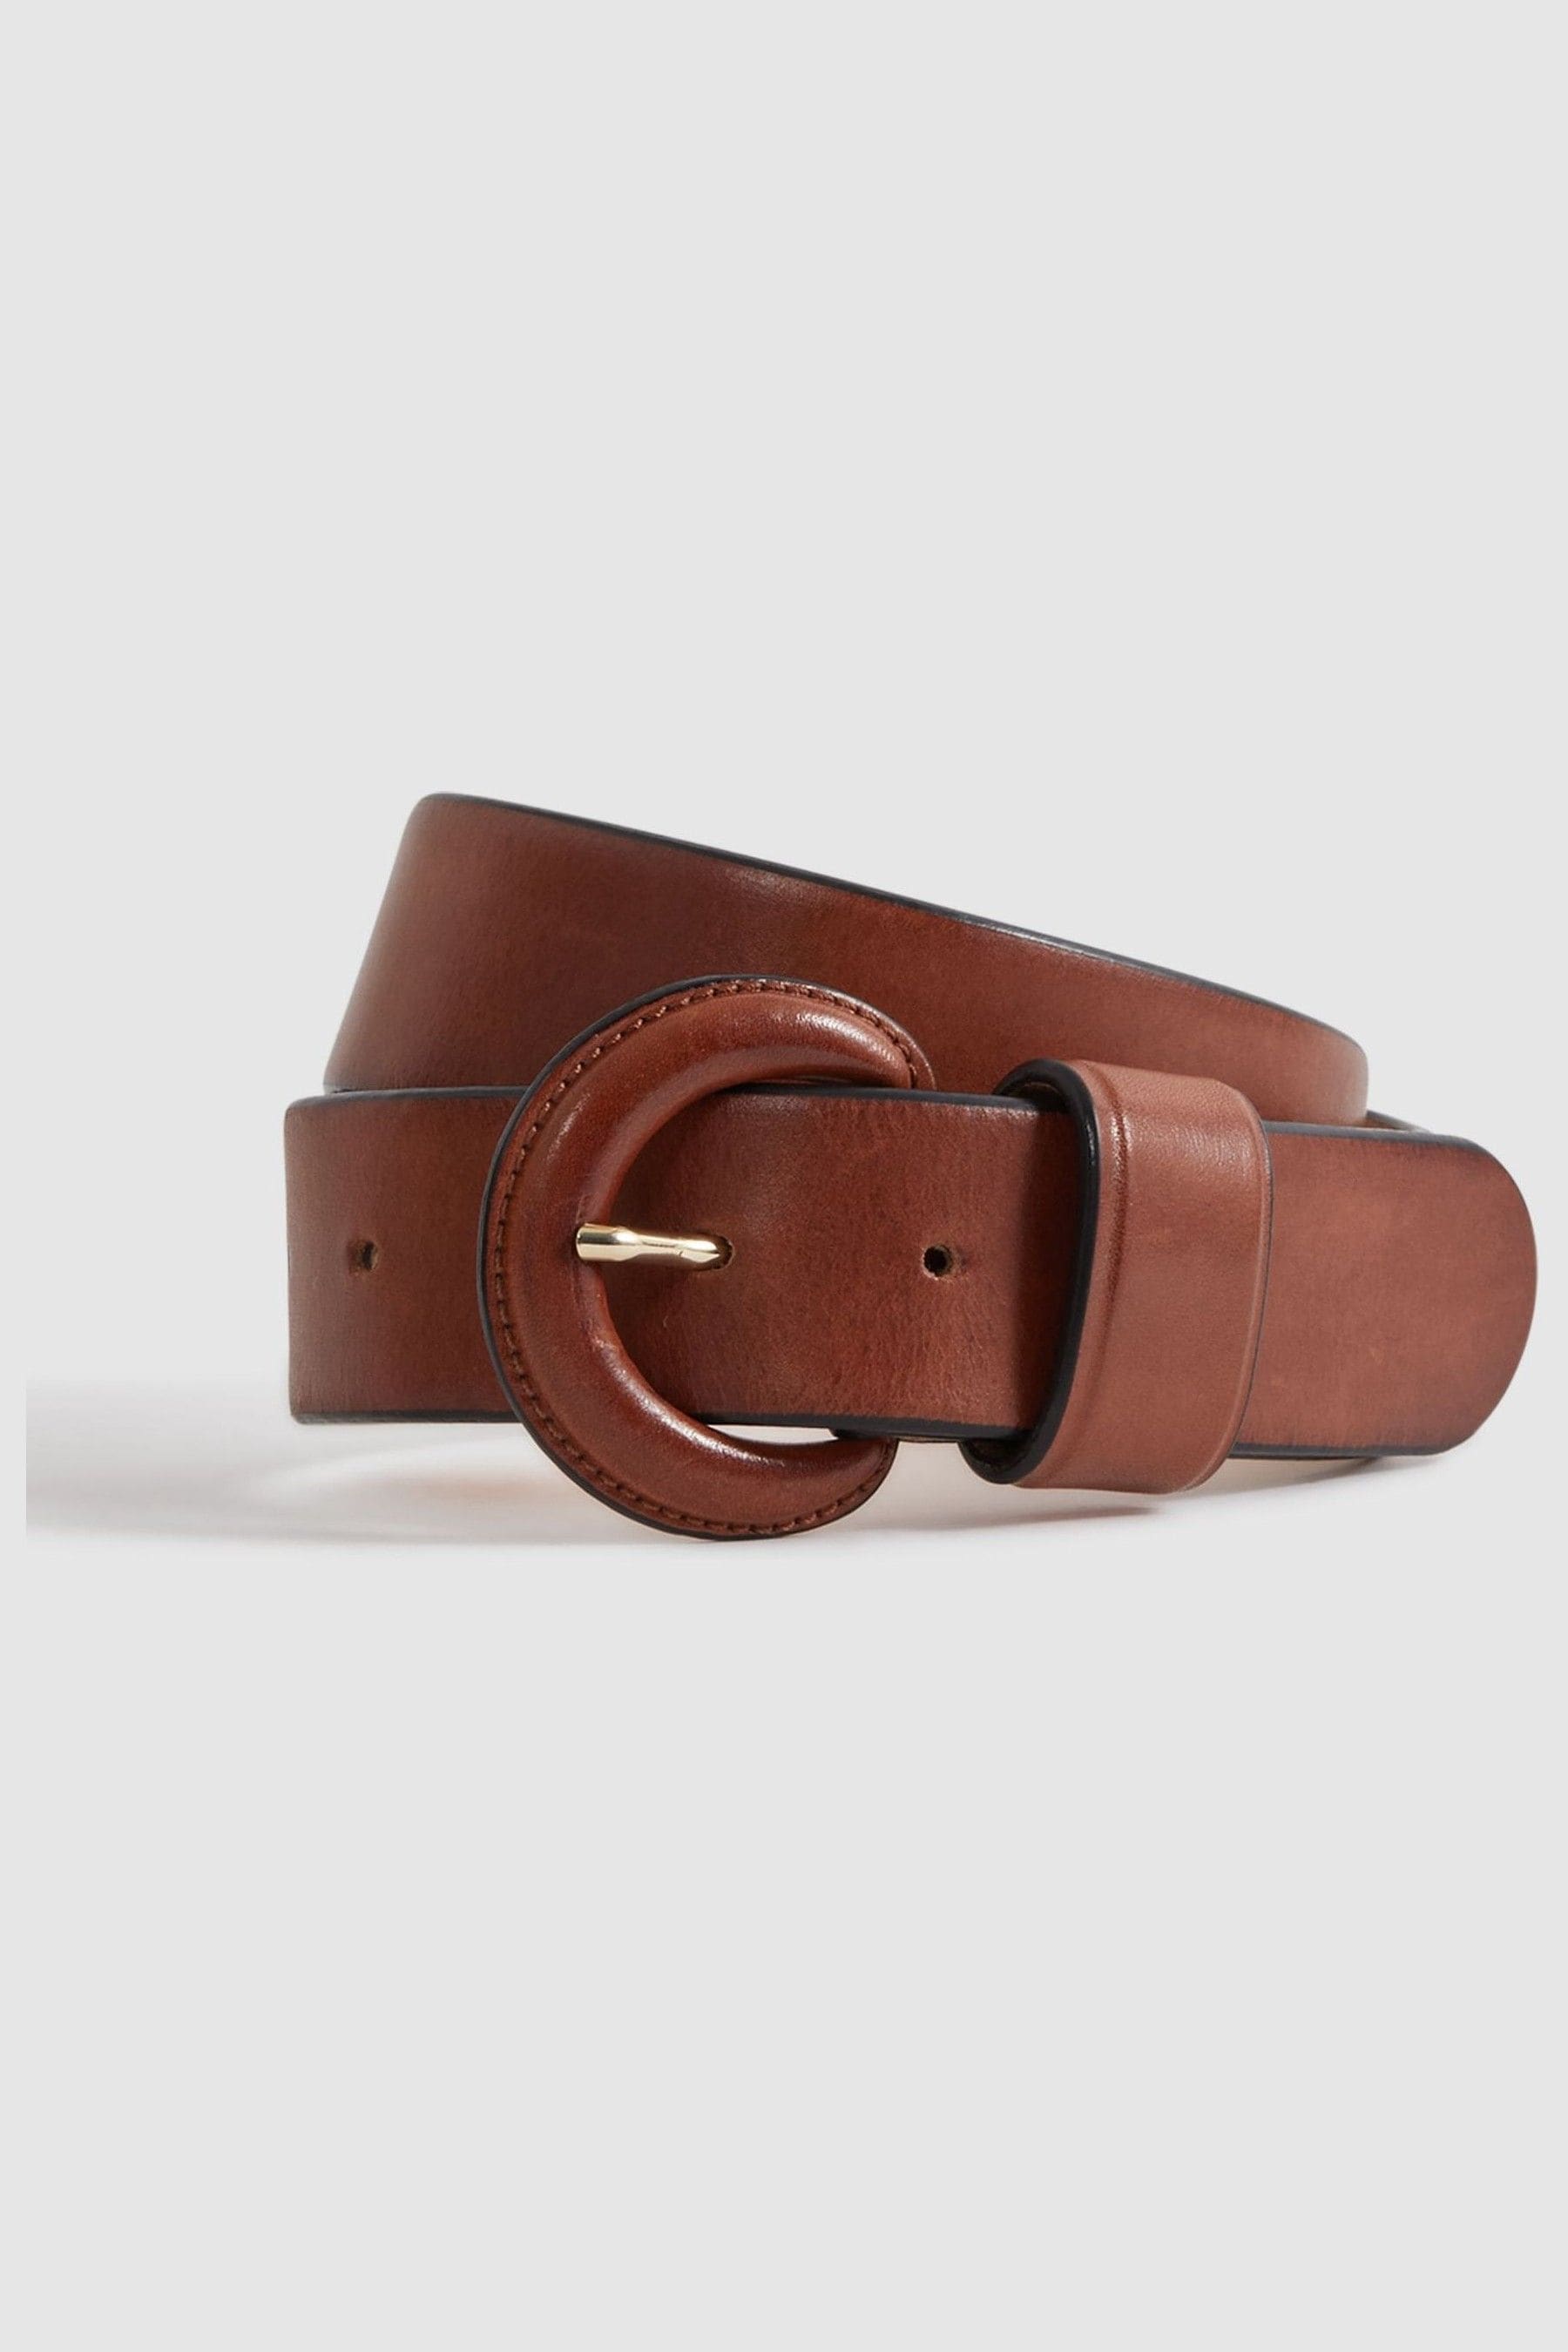 Reiss Nina - Tan Leather Round Buckle Belt, S